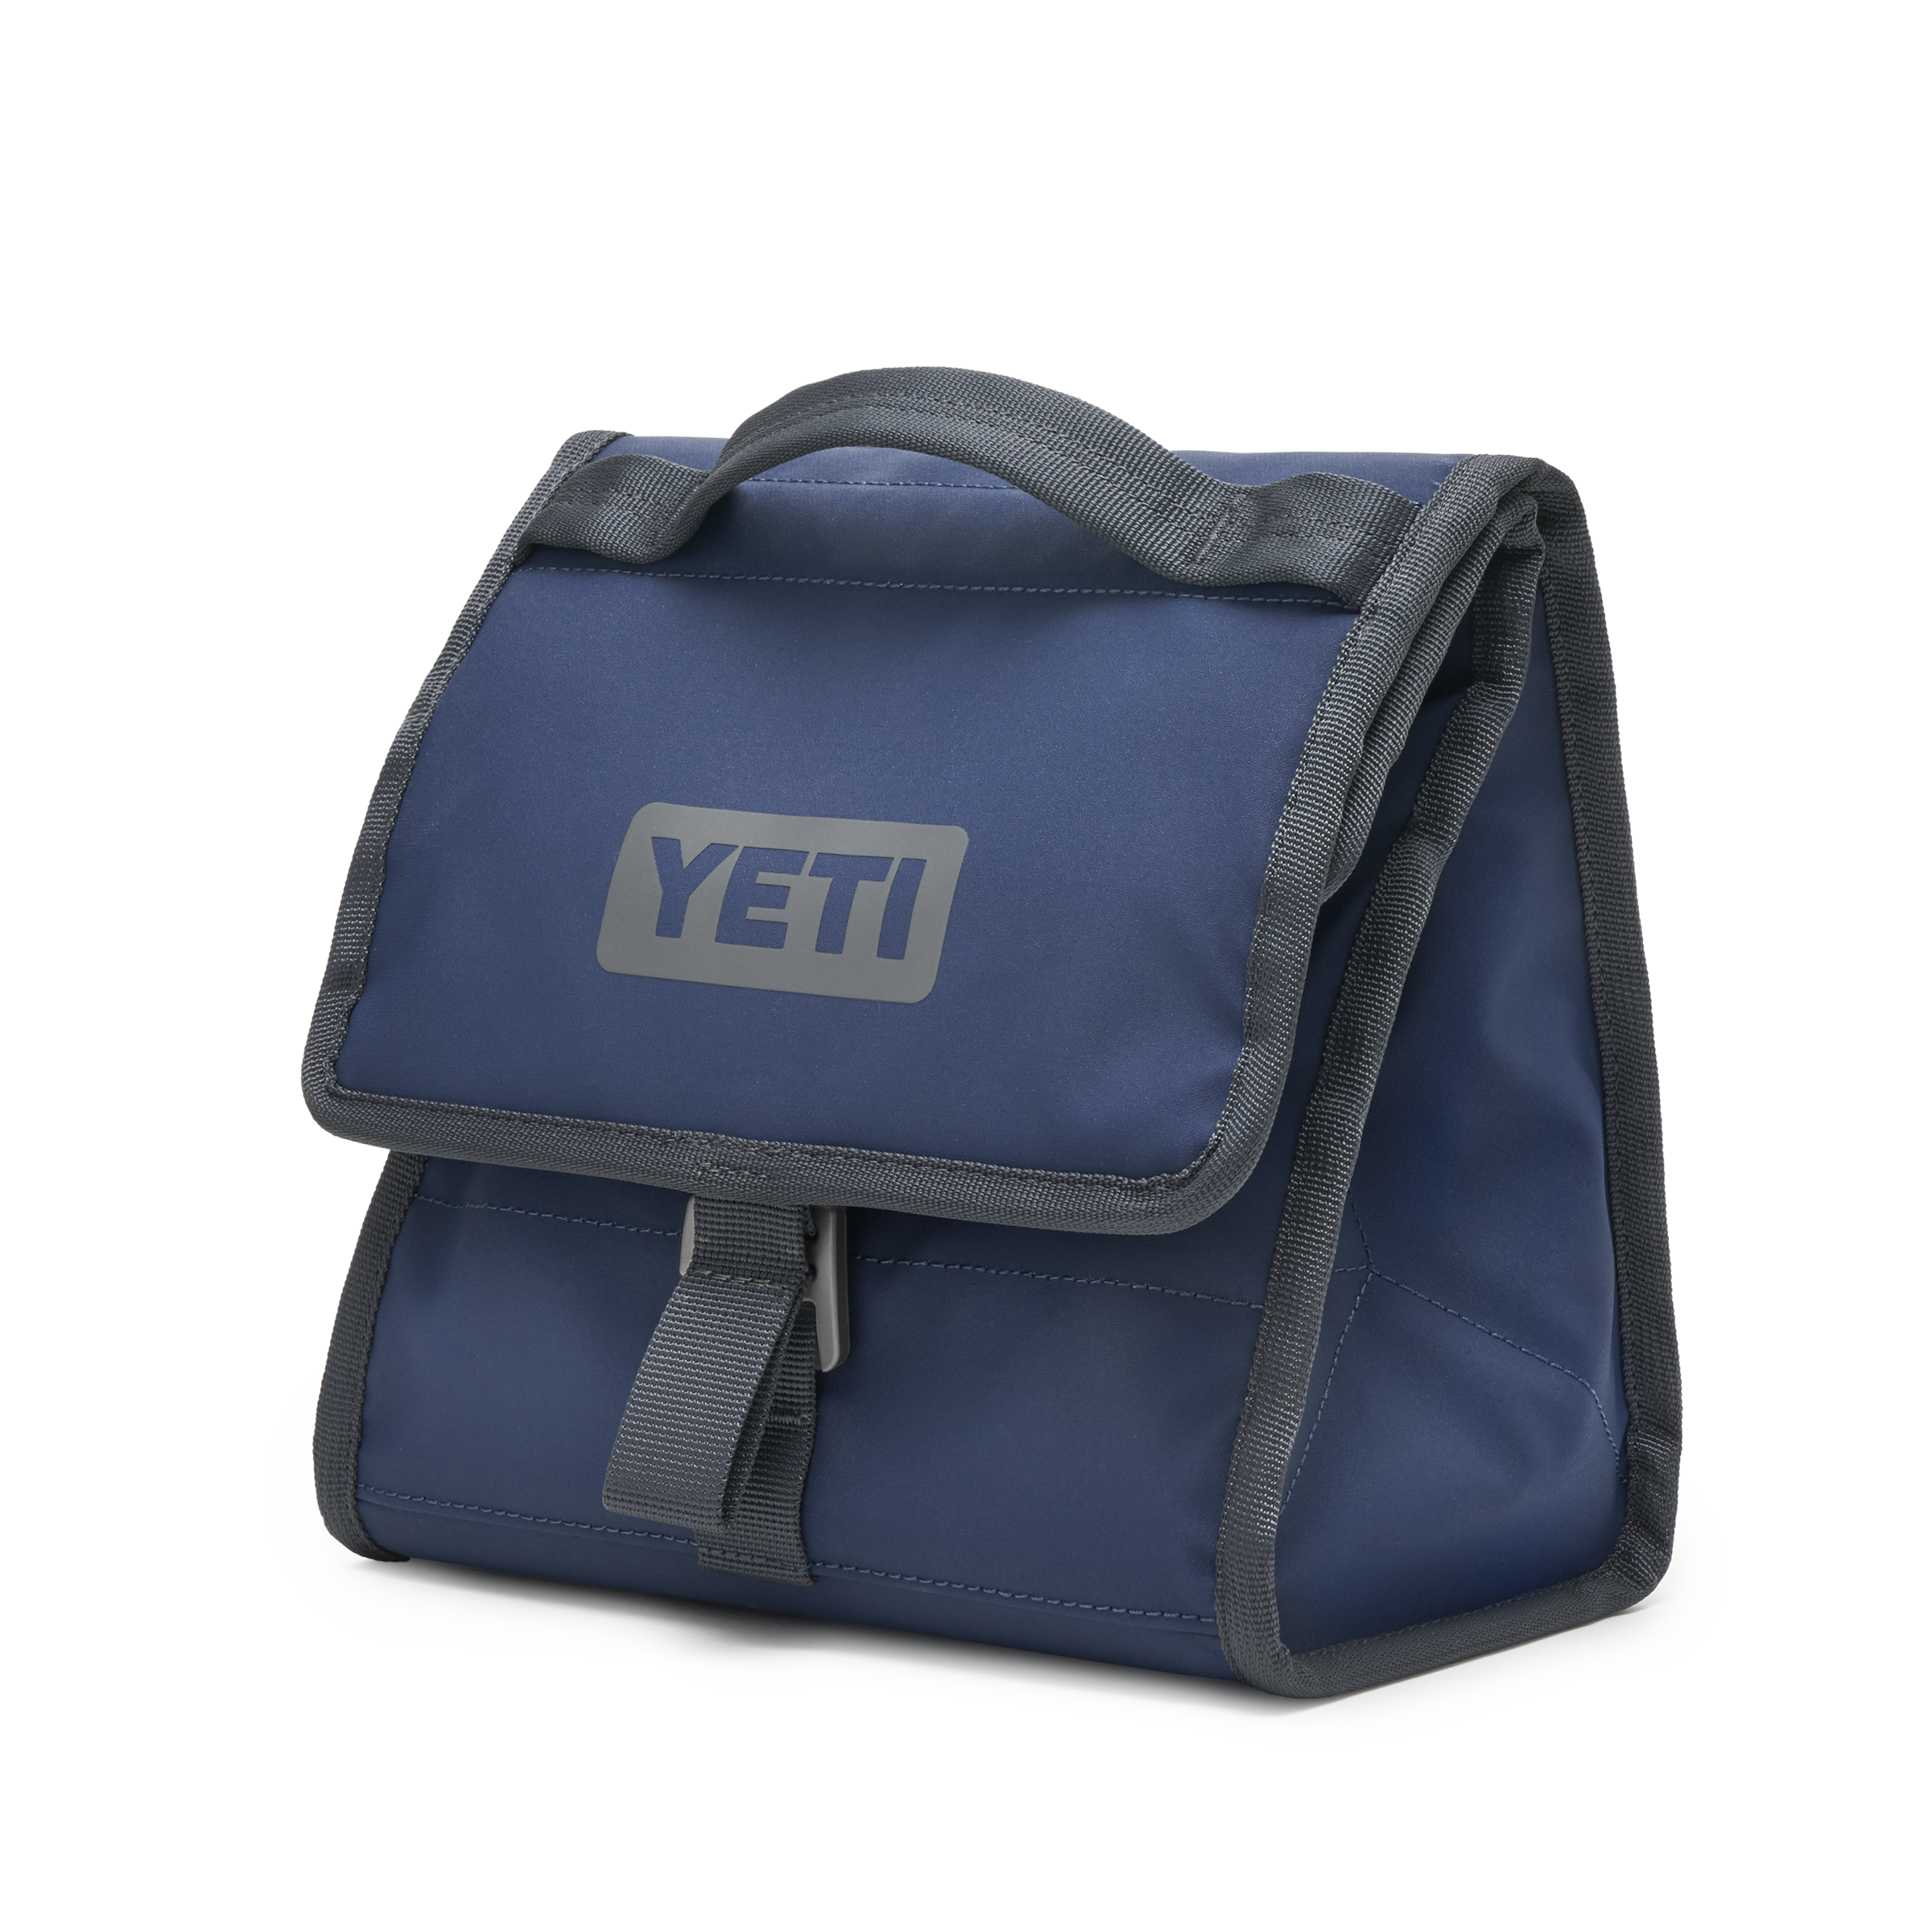 'YETI' Daytrip Lunch Bag - Navy